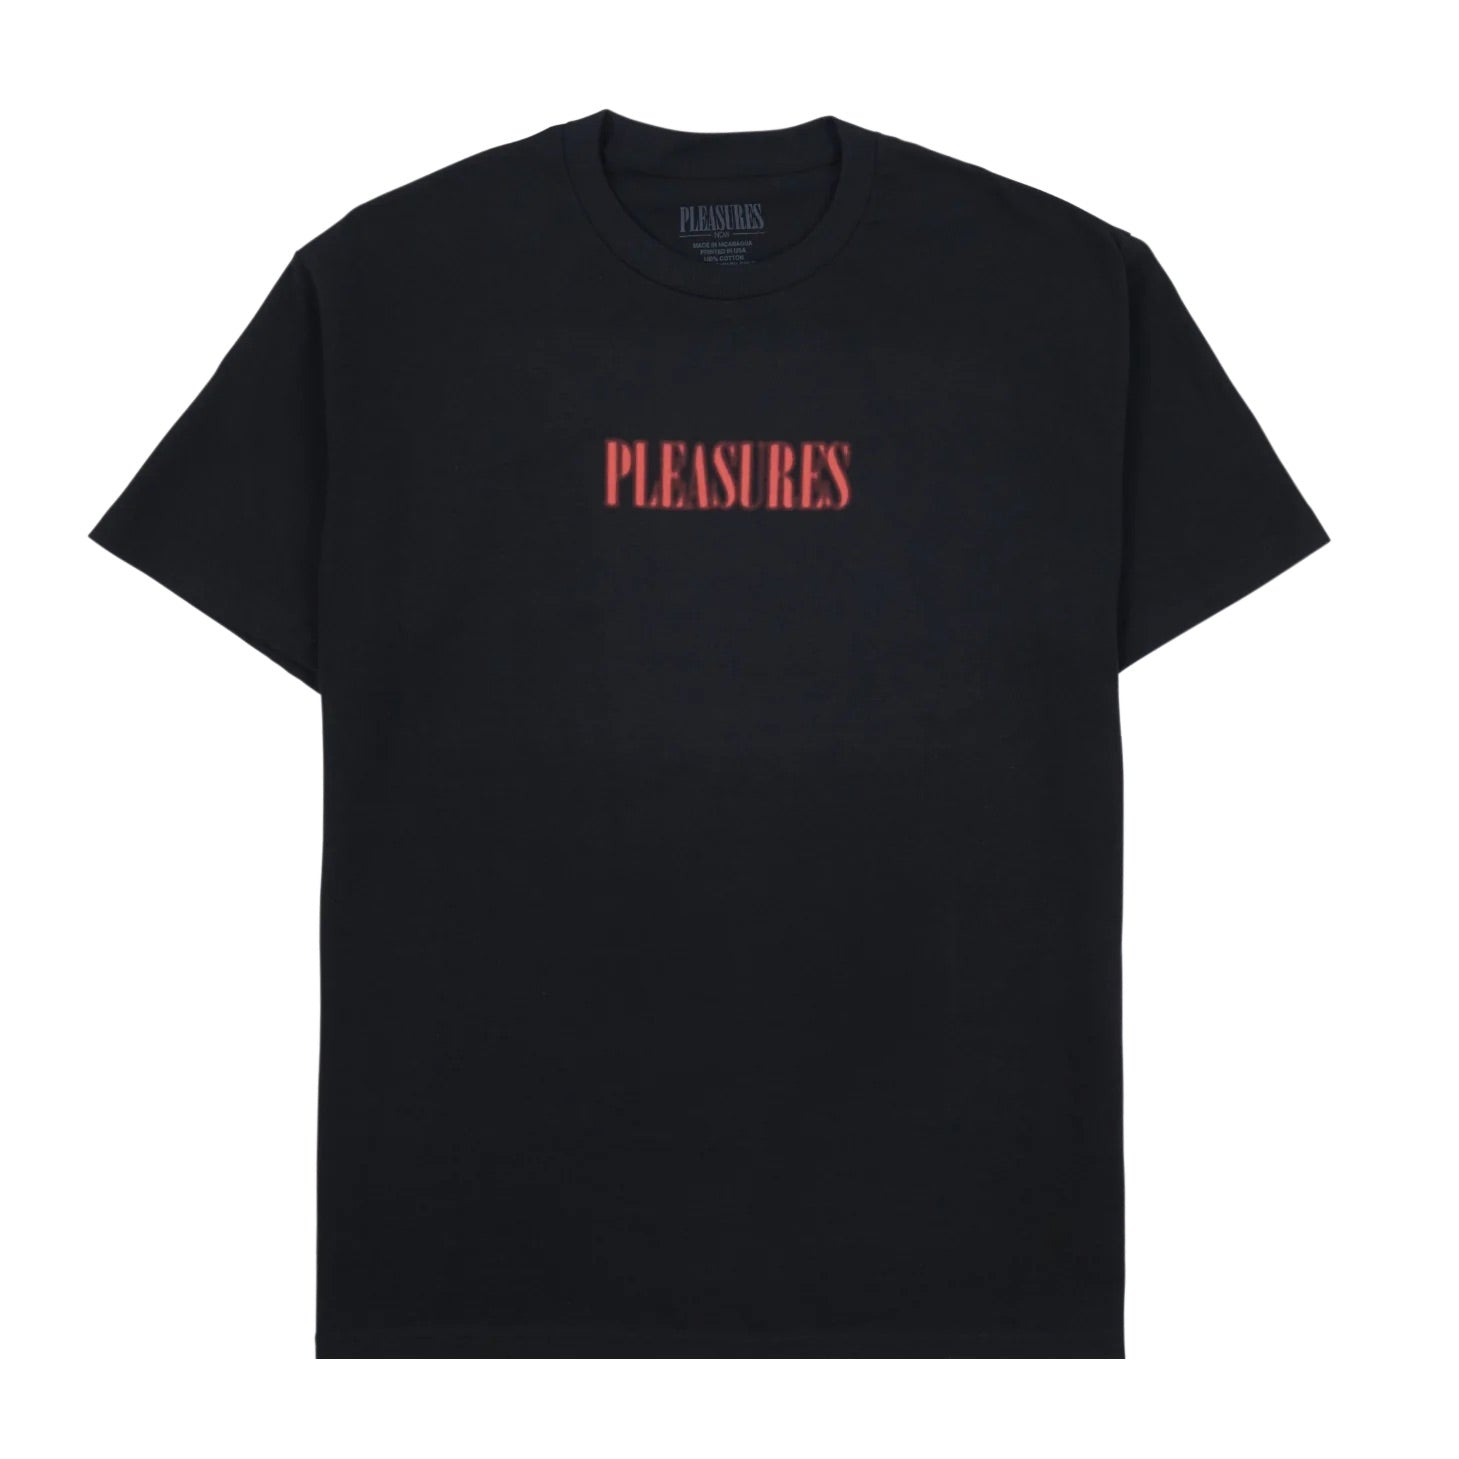 Pleasures Men Blurry T-Shirt Black - T-SHIRTS - Canada